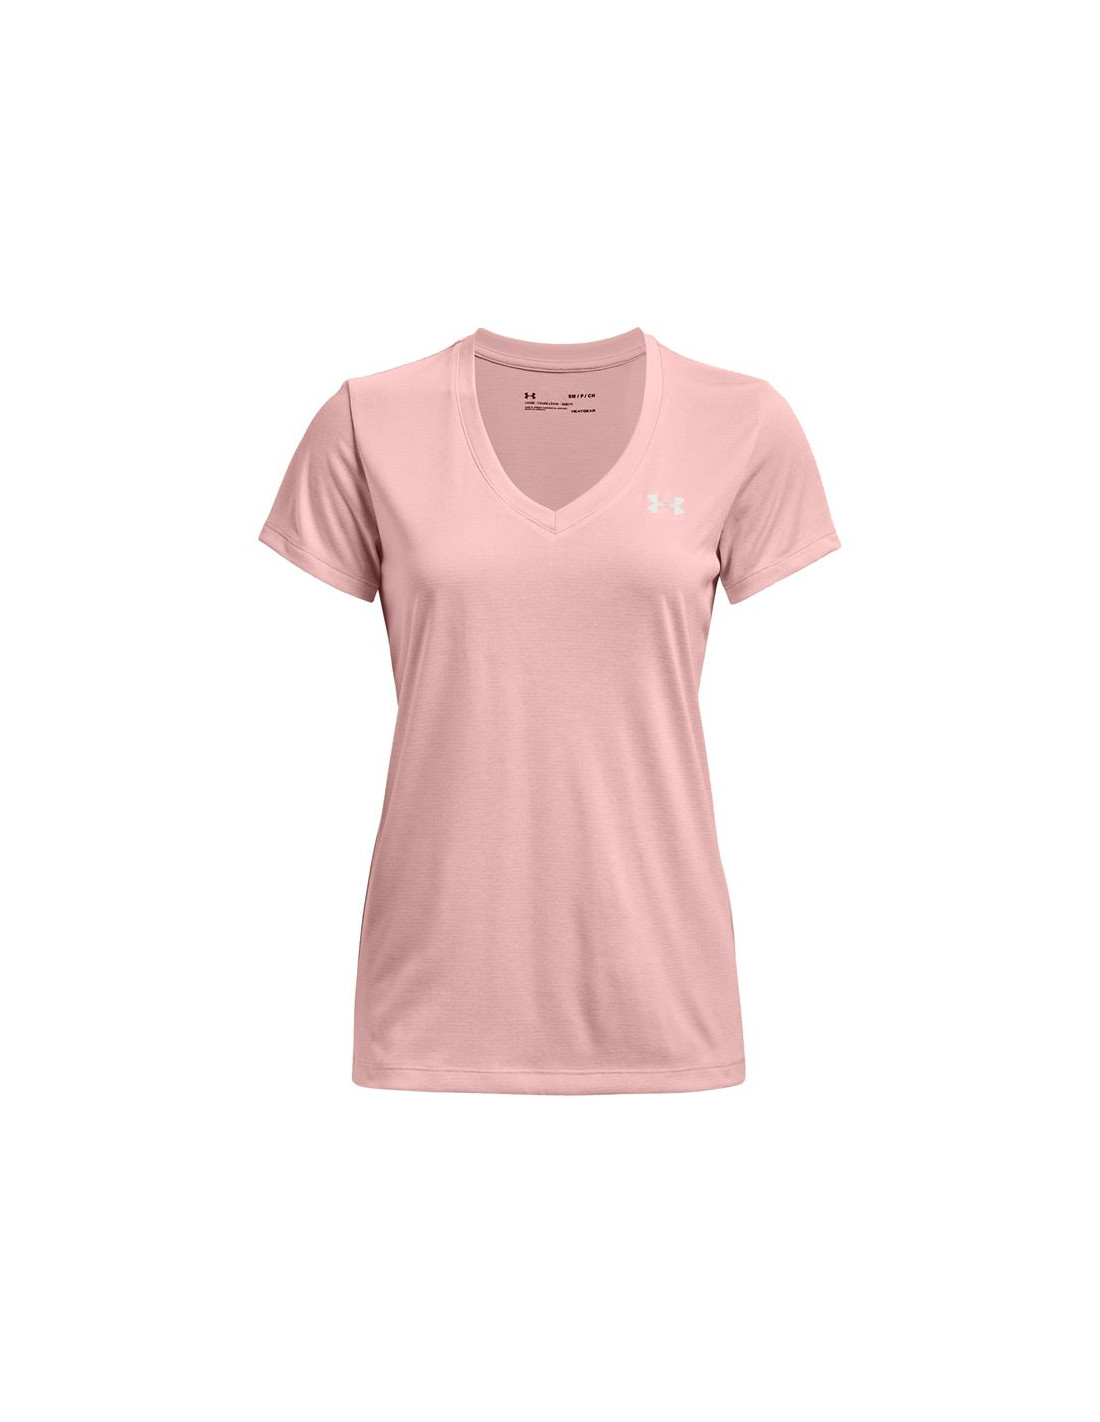 Camiseta under armour tech ssv mujer pink